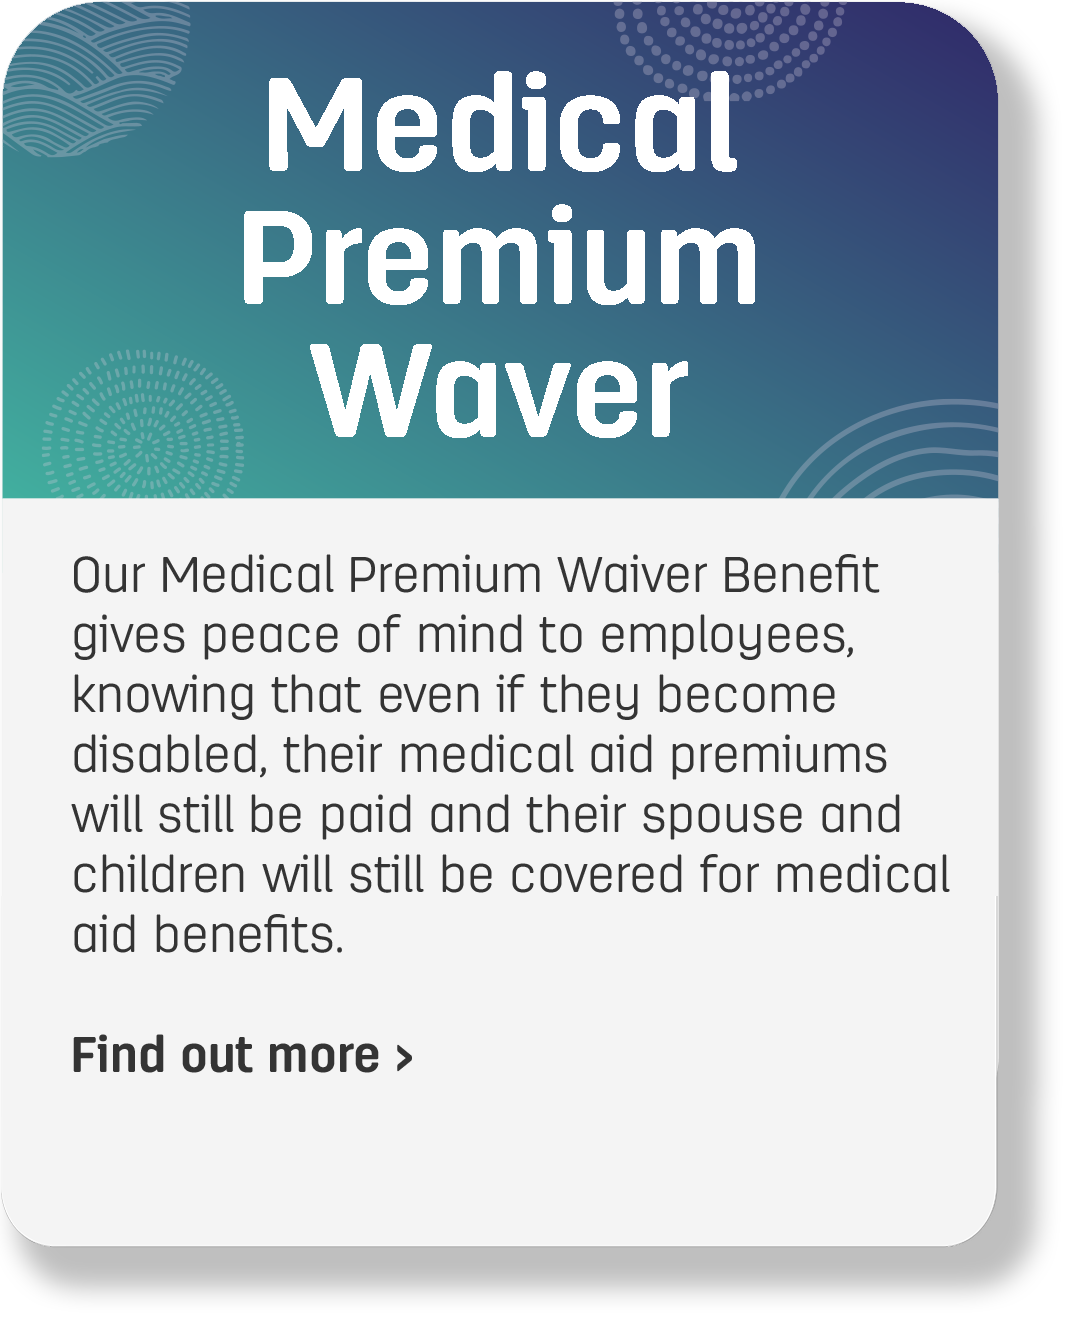 Medical premium waver image